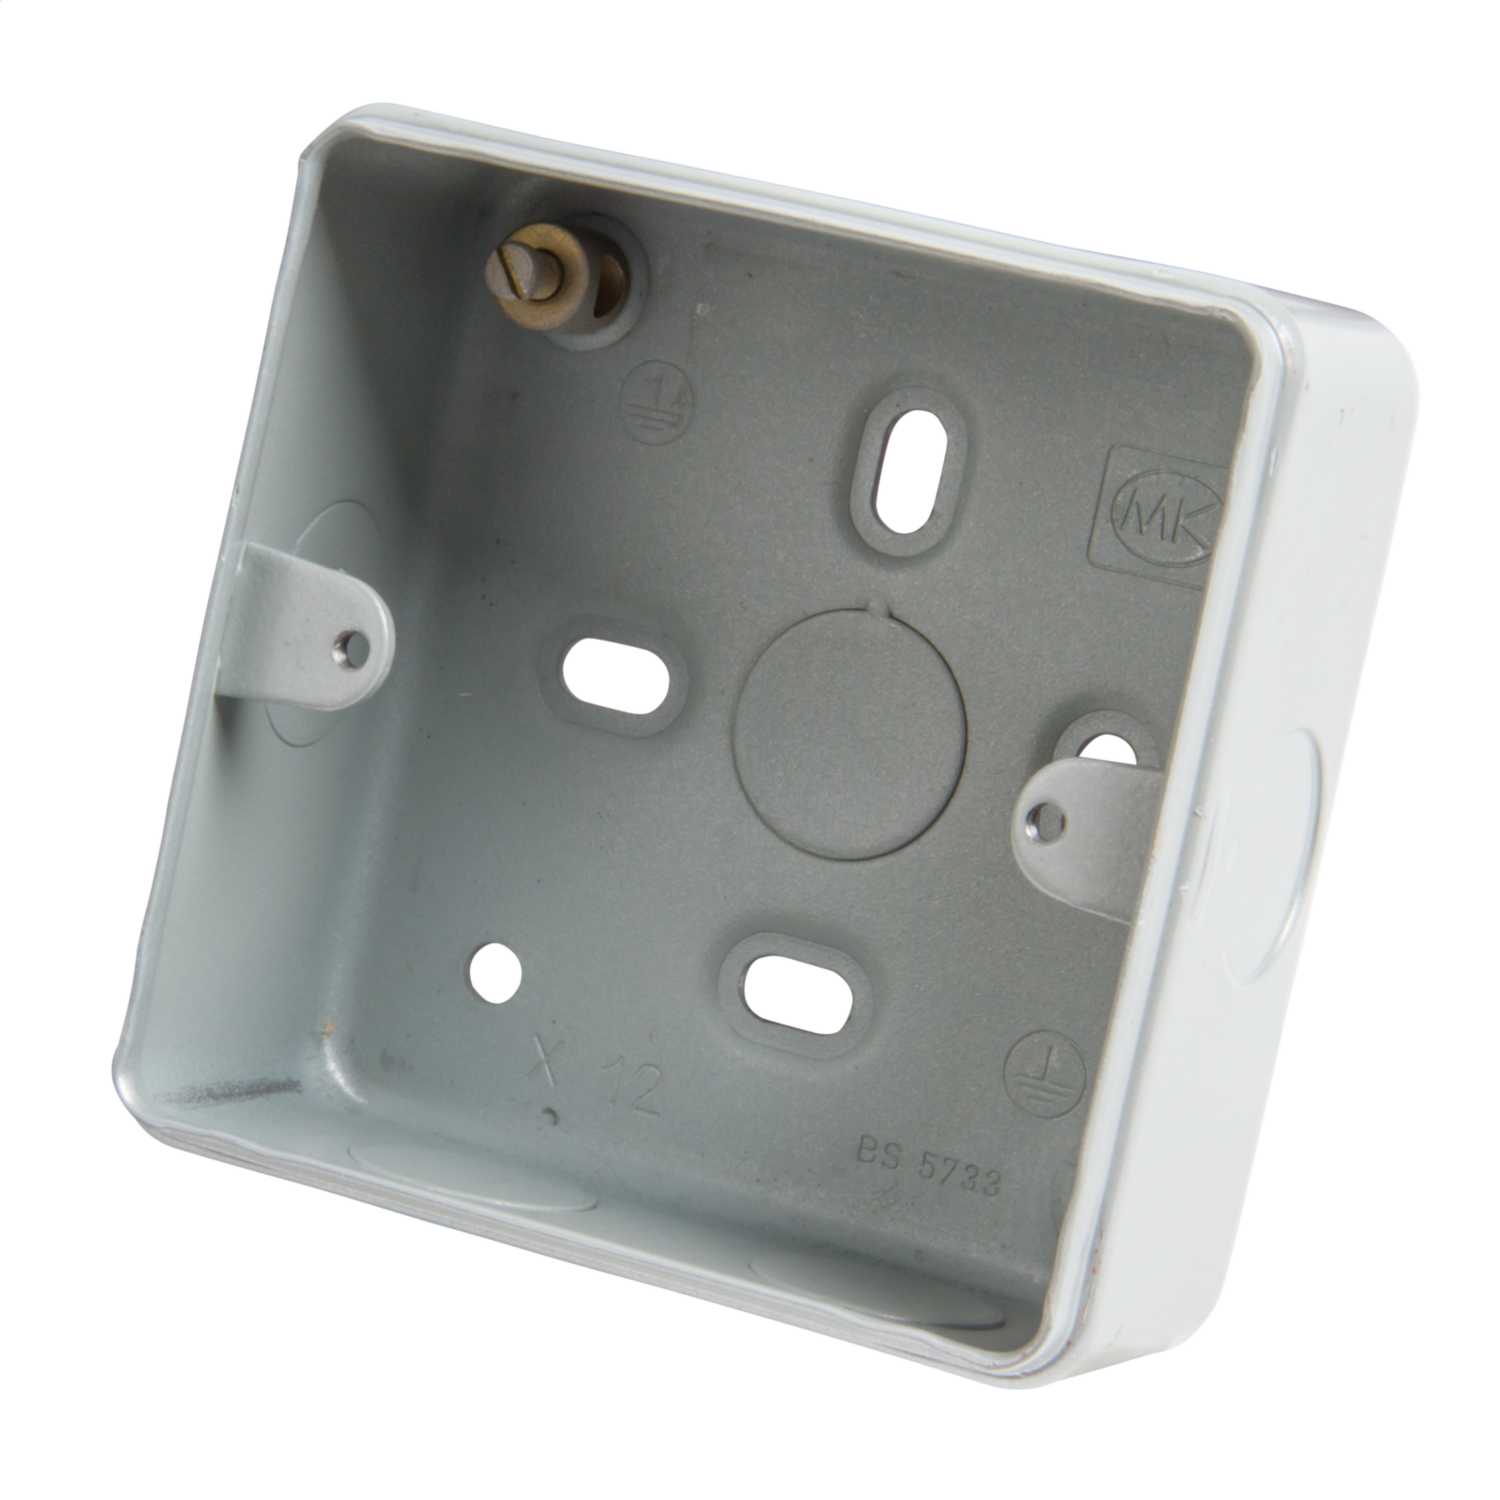 MK K899ALM 1 g surface Metal Clad Box